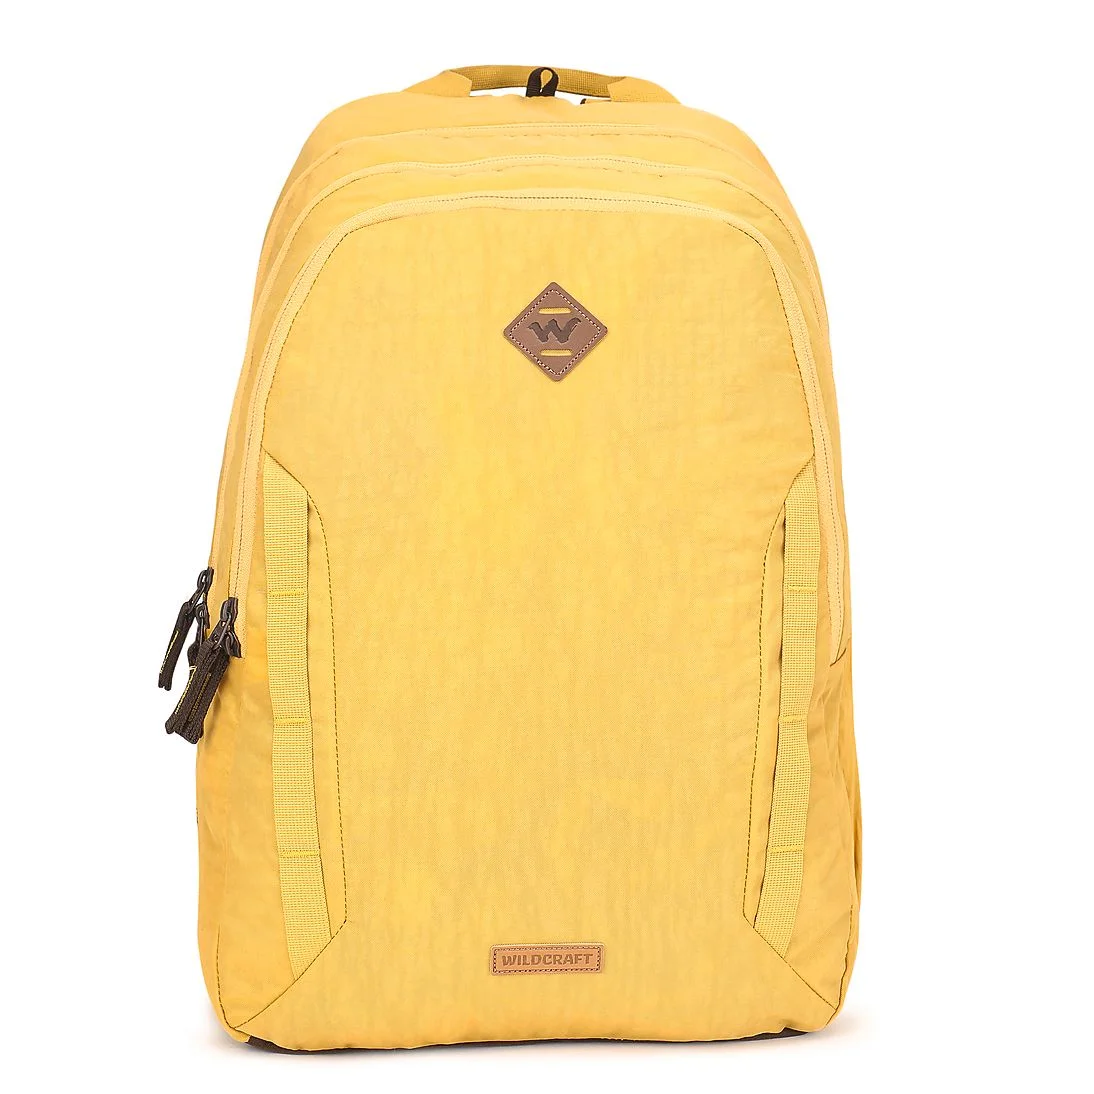 Buy BAGS N PACKS 55 LTRS MUSTARD GREY FOOTLOOSE Rucksack Daypack Backpack  Bag for Travel Hiking Trekking & Camping for Men & Women at Amazon.in